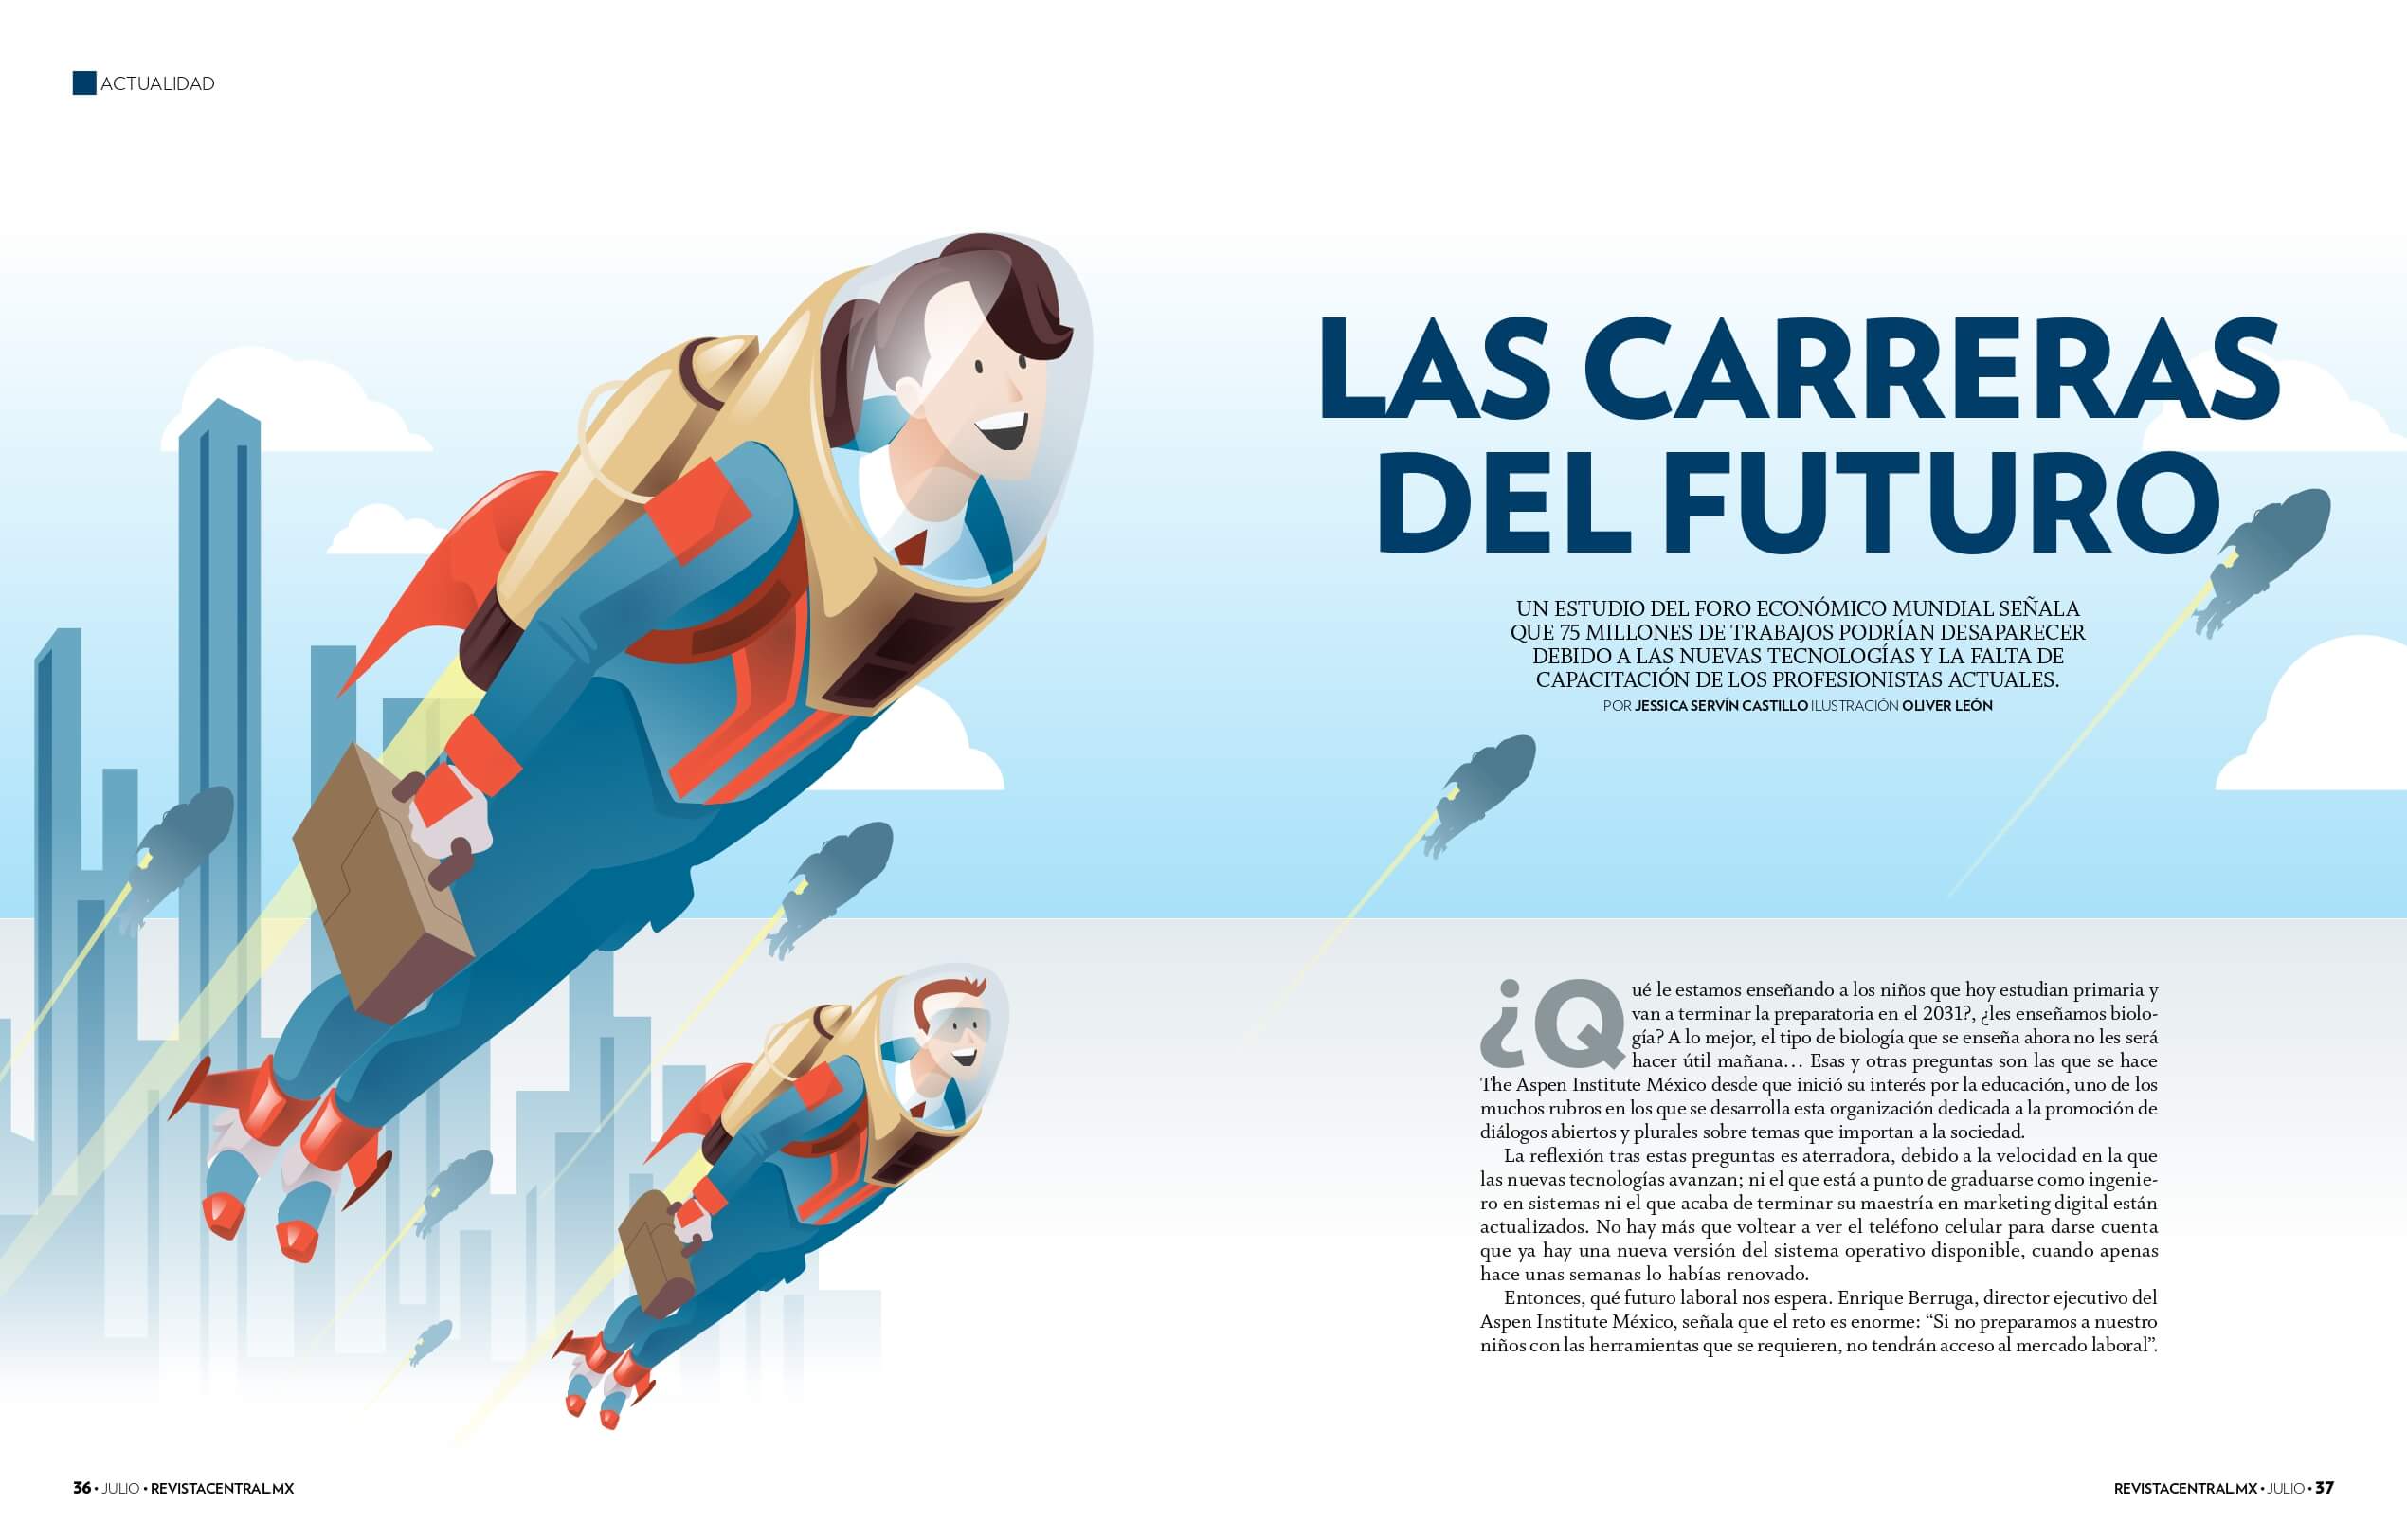 Las carreras del futuro The Aspen Institute México